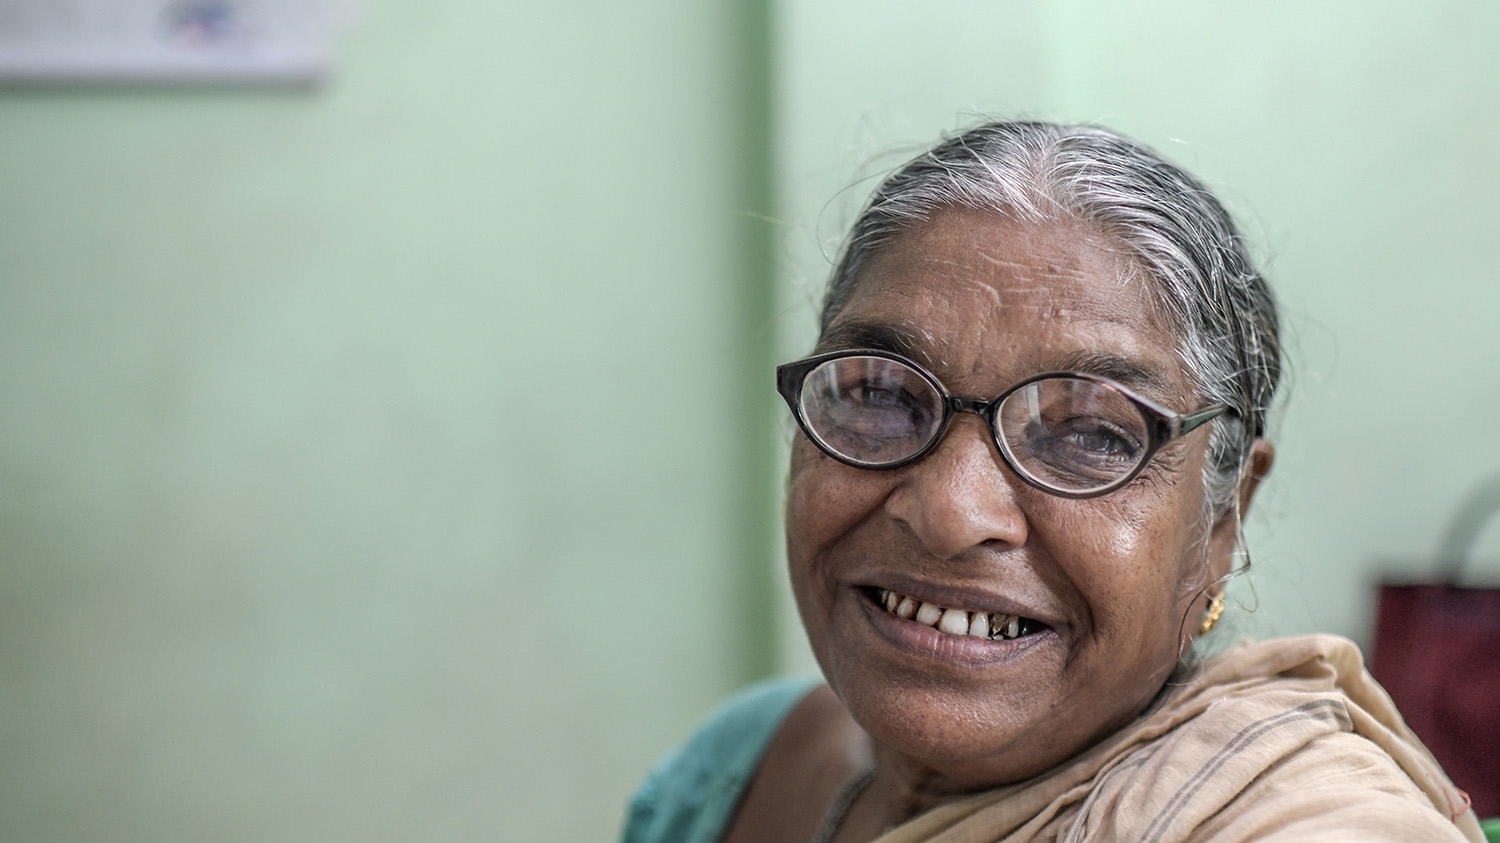 Monimala smiles while wearing glasses during an eye exam in the Sundarbans.